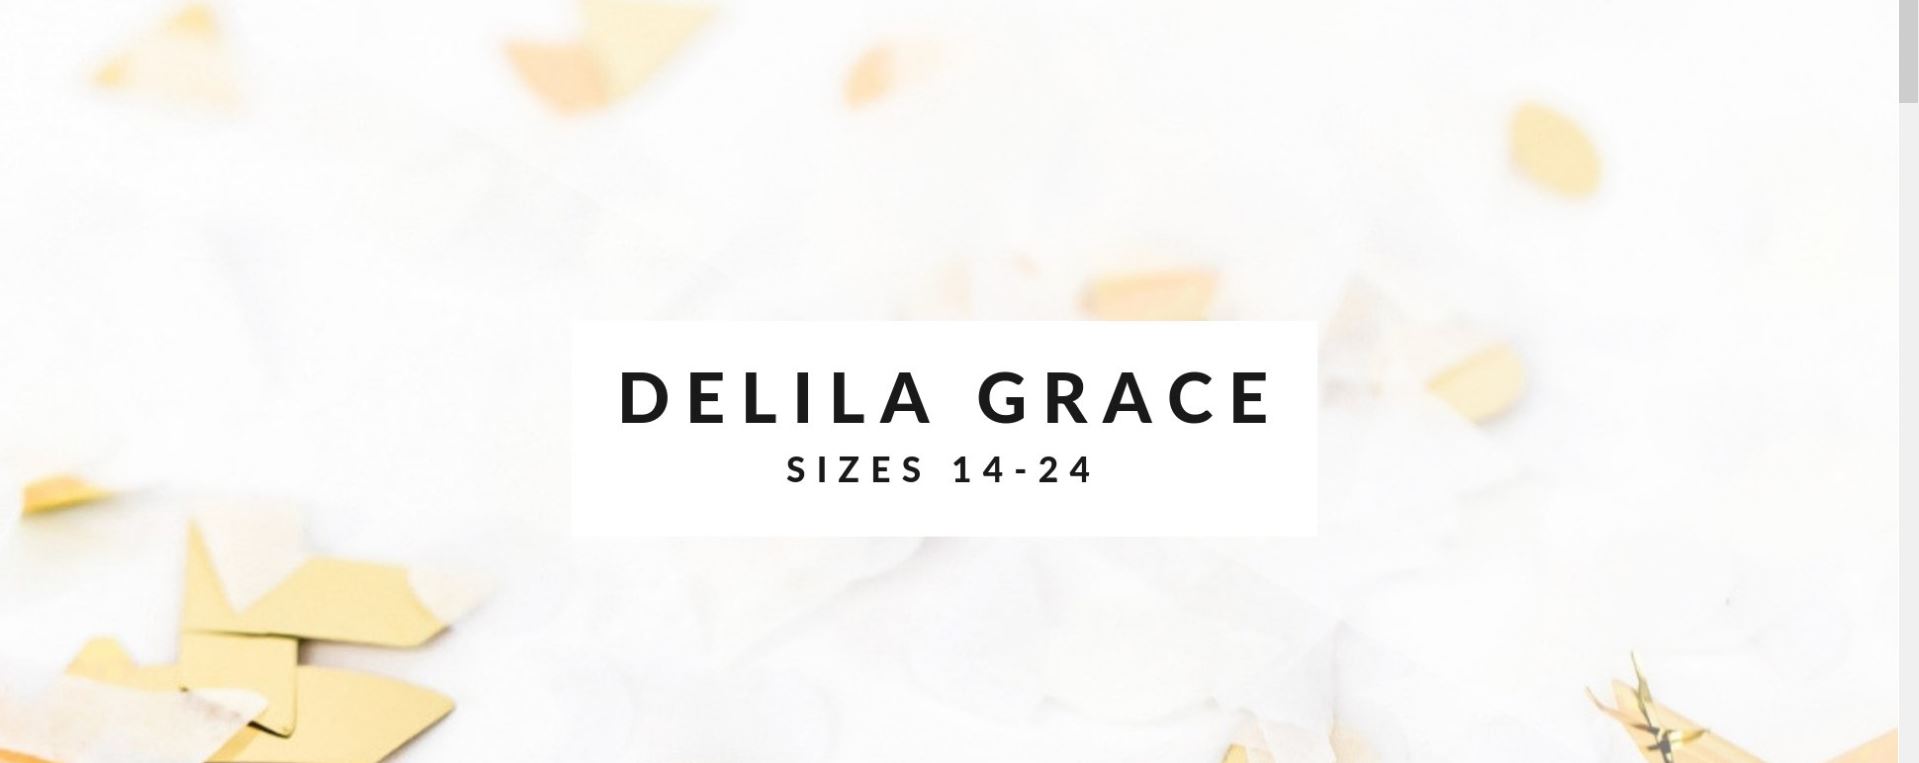 Delila Grace